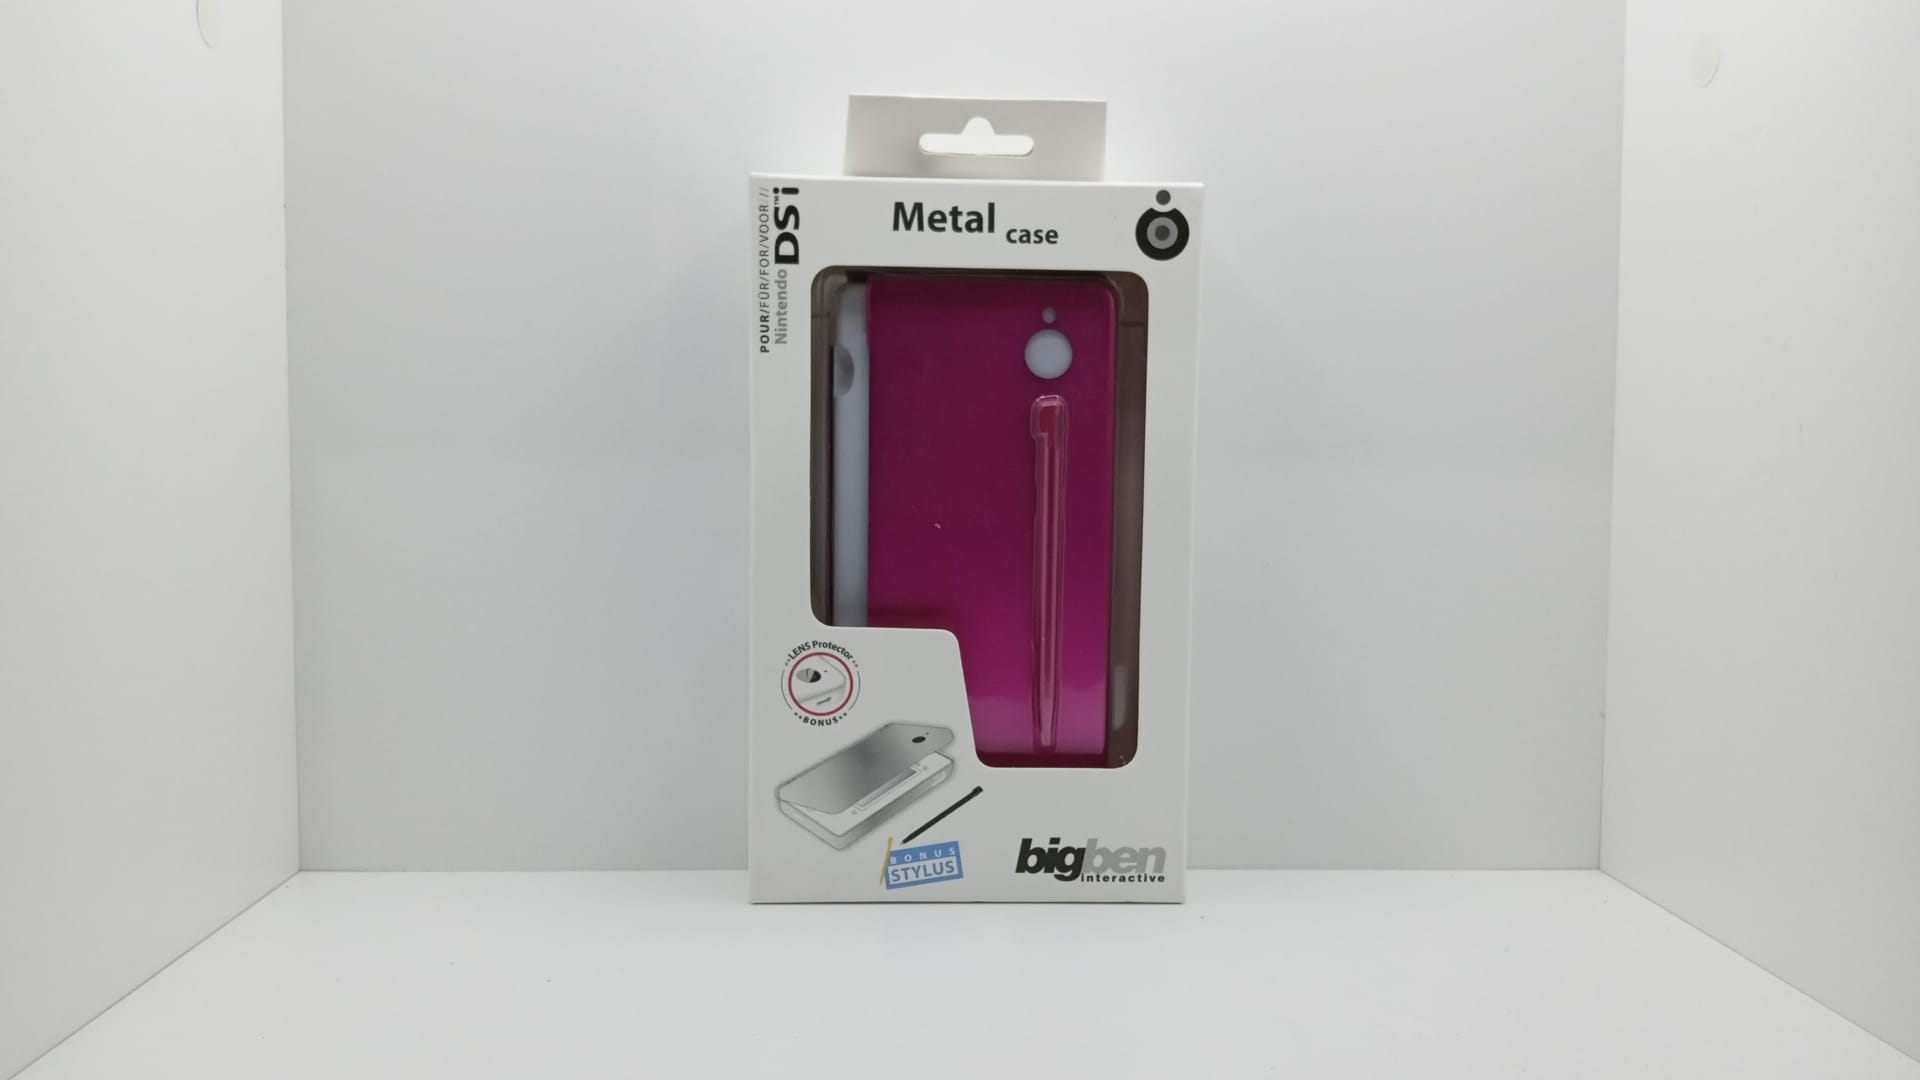 Carcasa metalica + Stylus - BigBen -Nintendo DSi - 004